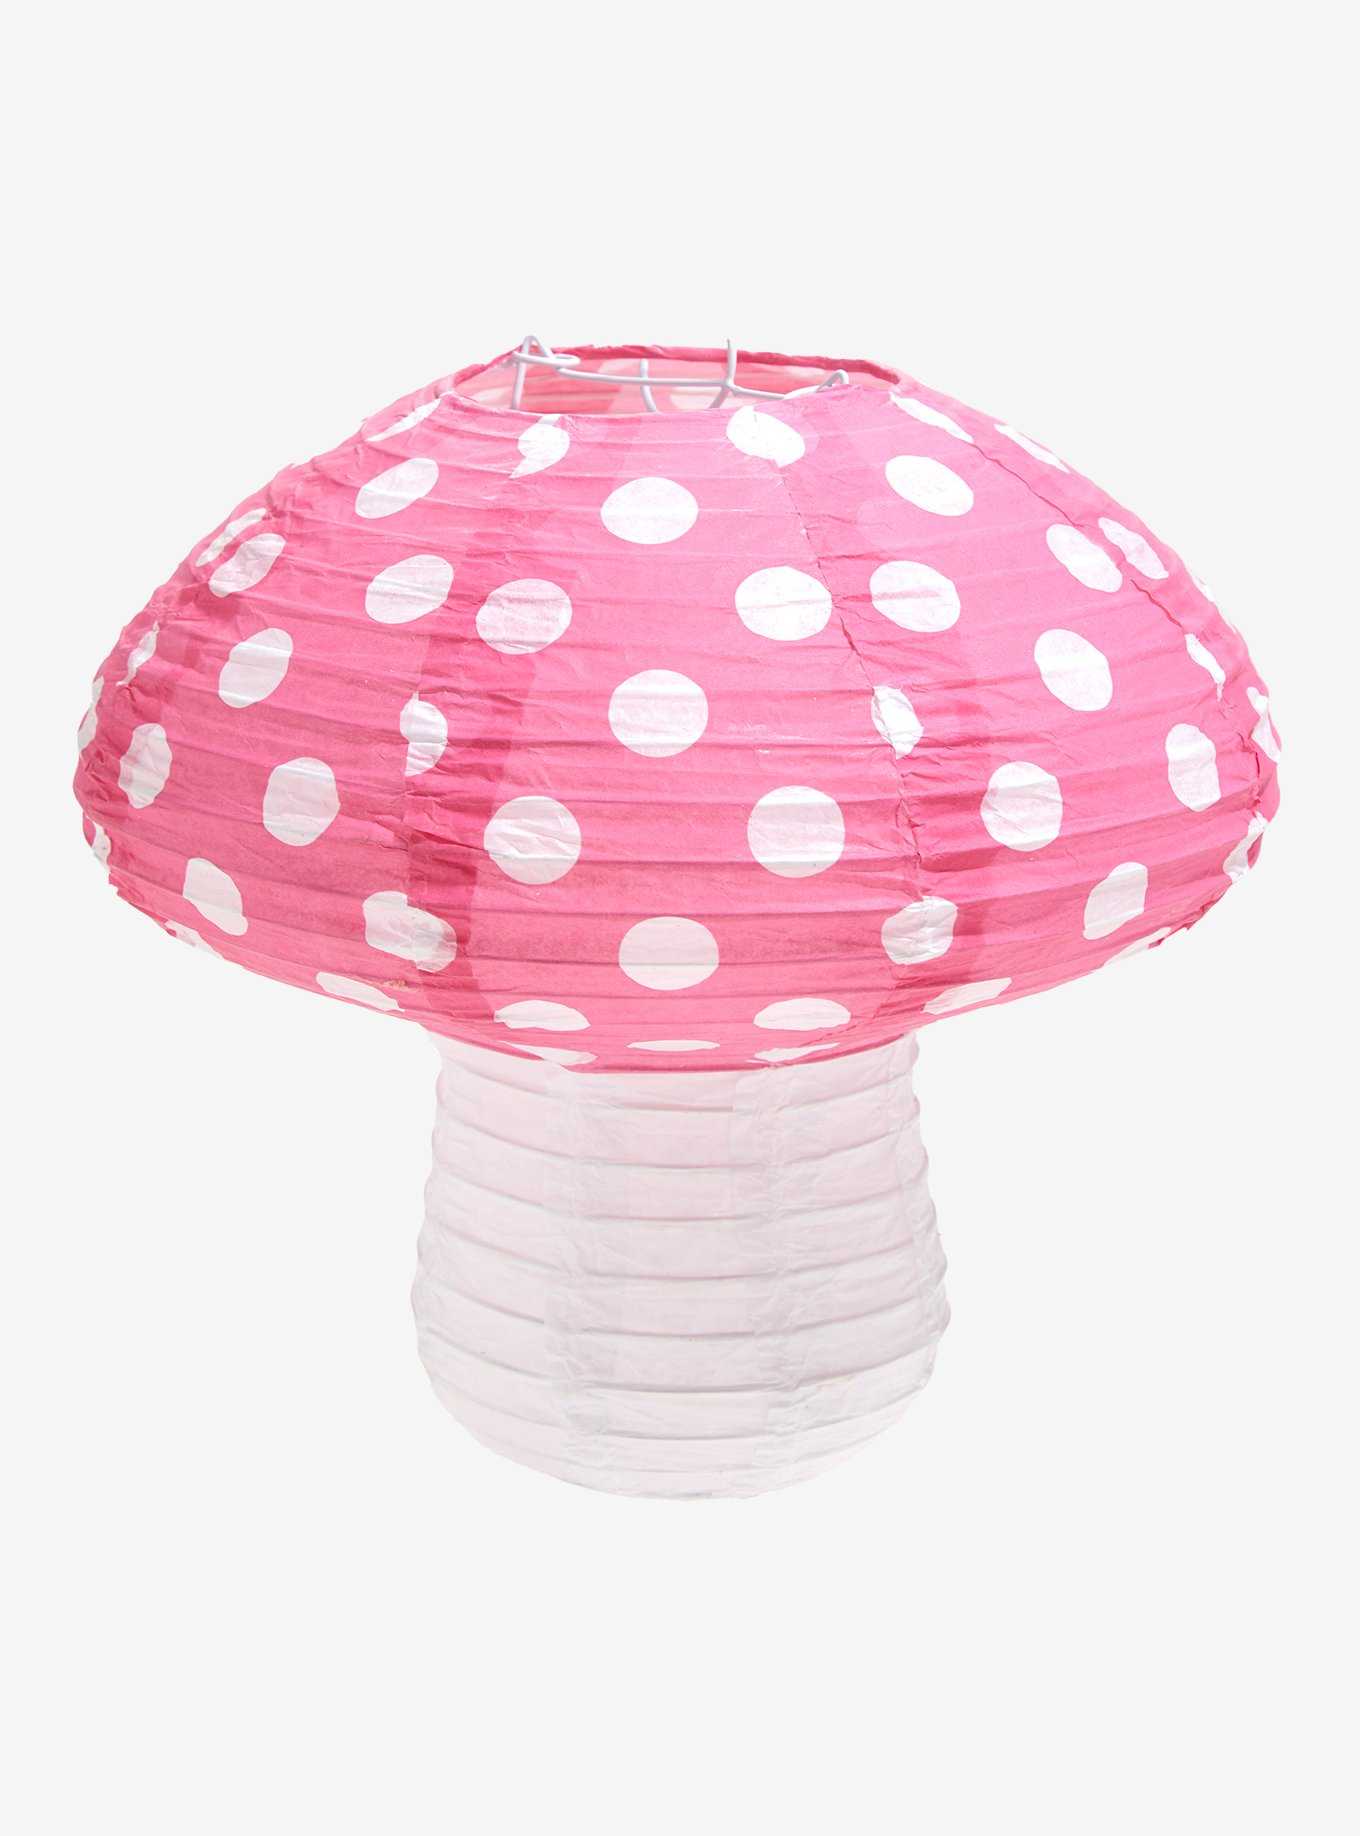 Pink Mushroom Paper Lantern, , hi-res